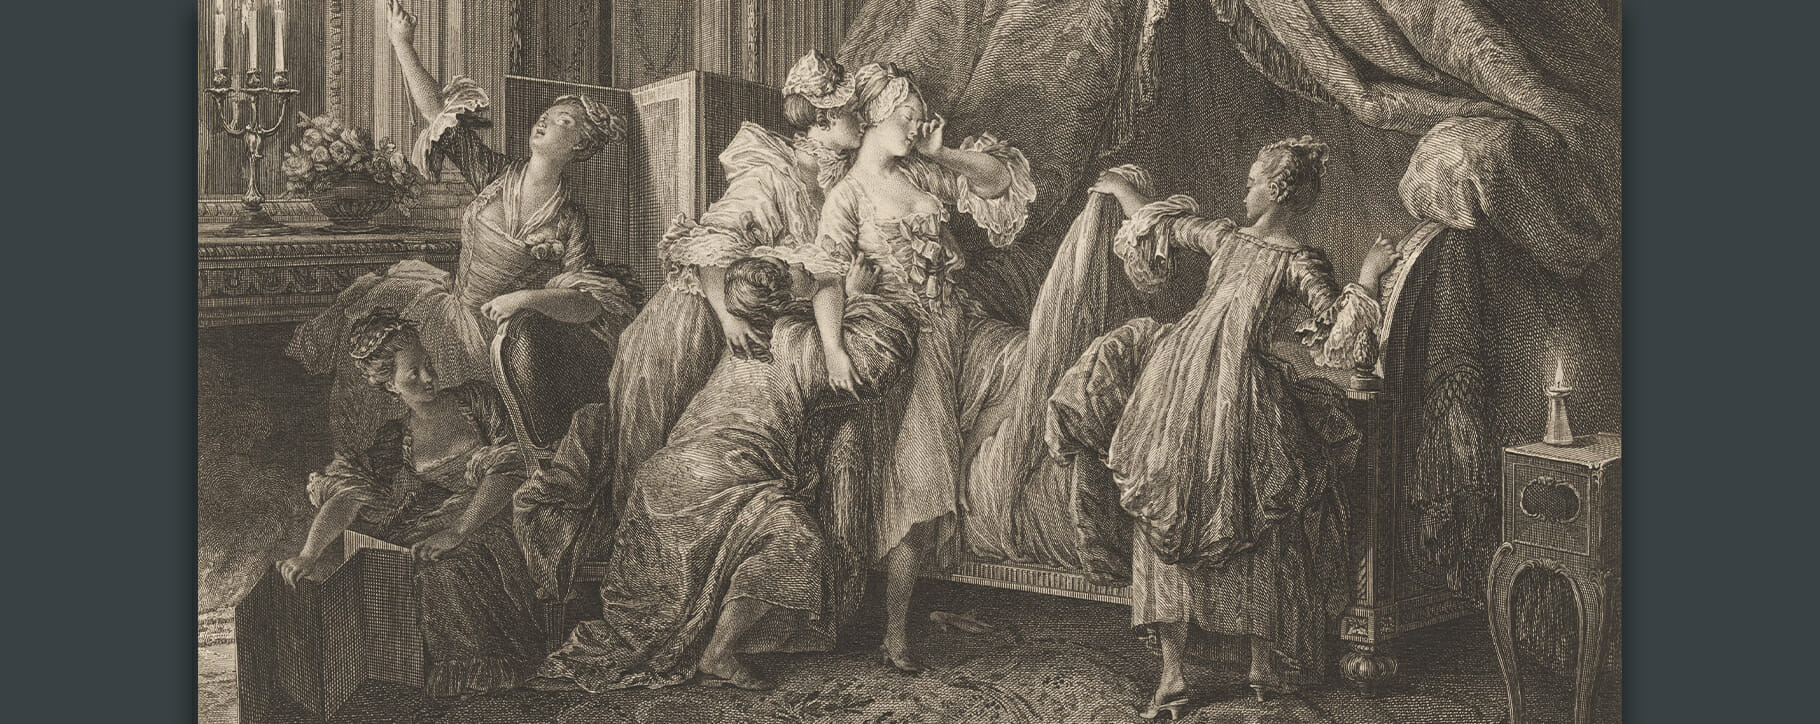 18th century bed scene